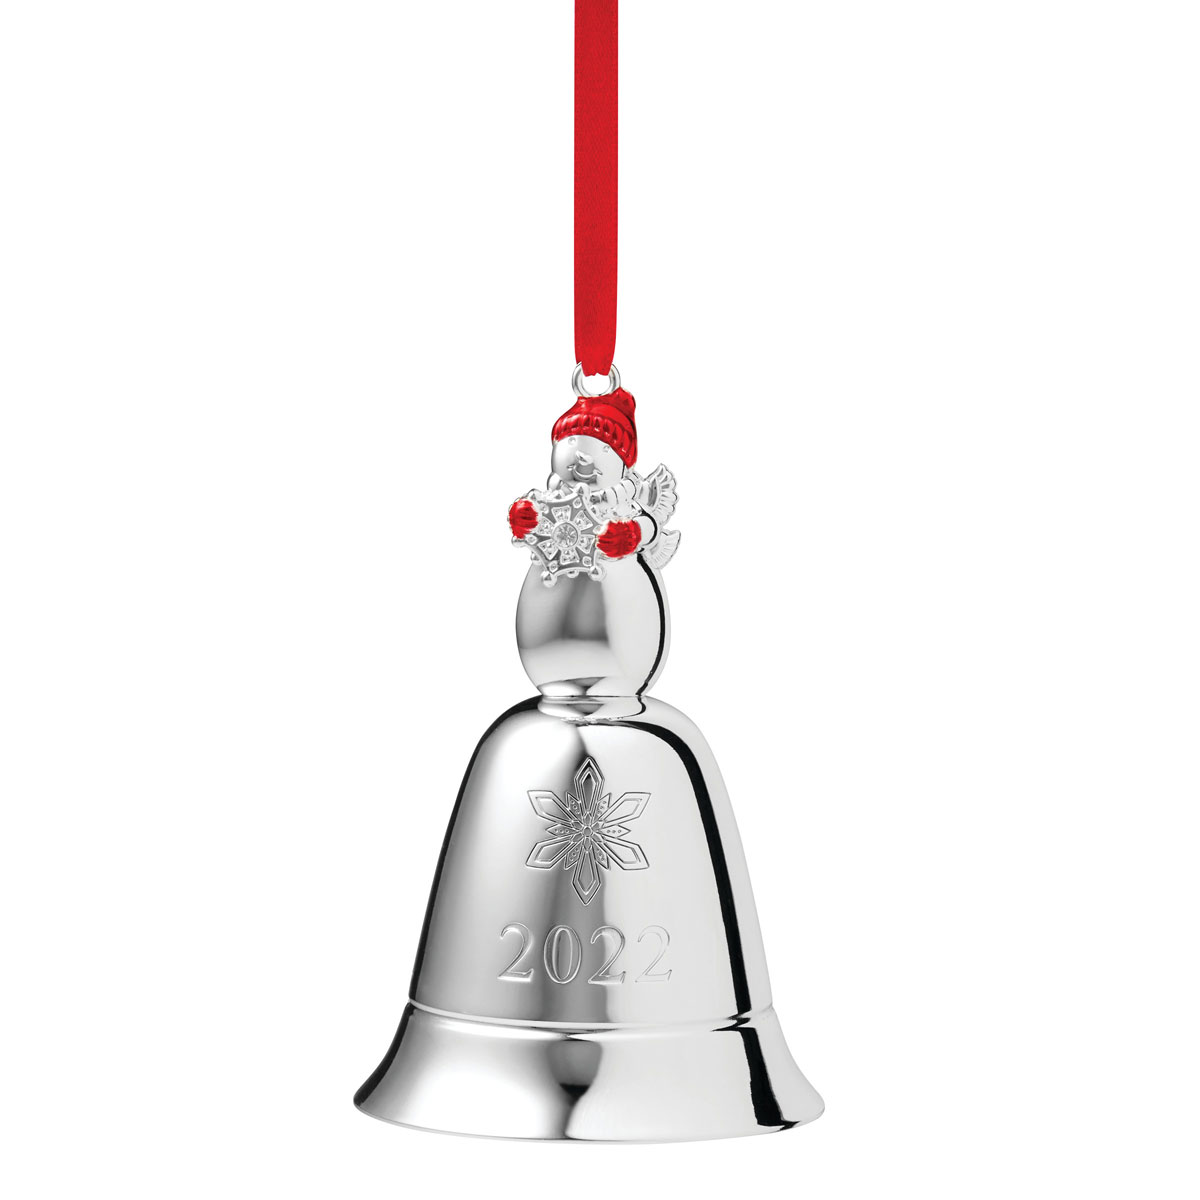 Lenox Christmas 2022 Annual Musical Bell Snowman Ornament, Jingle Bells